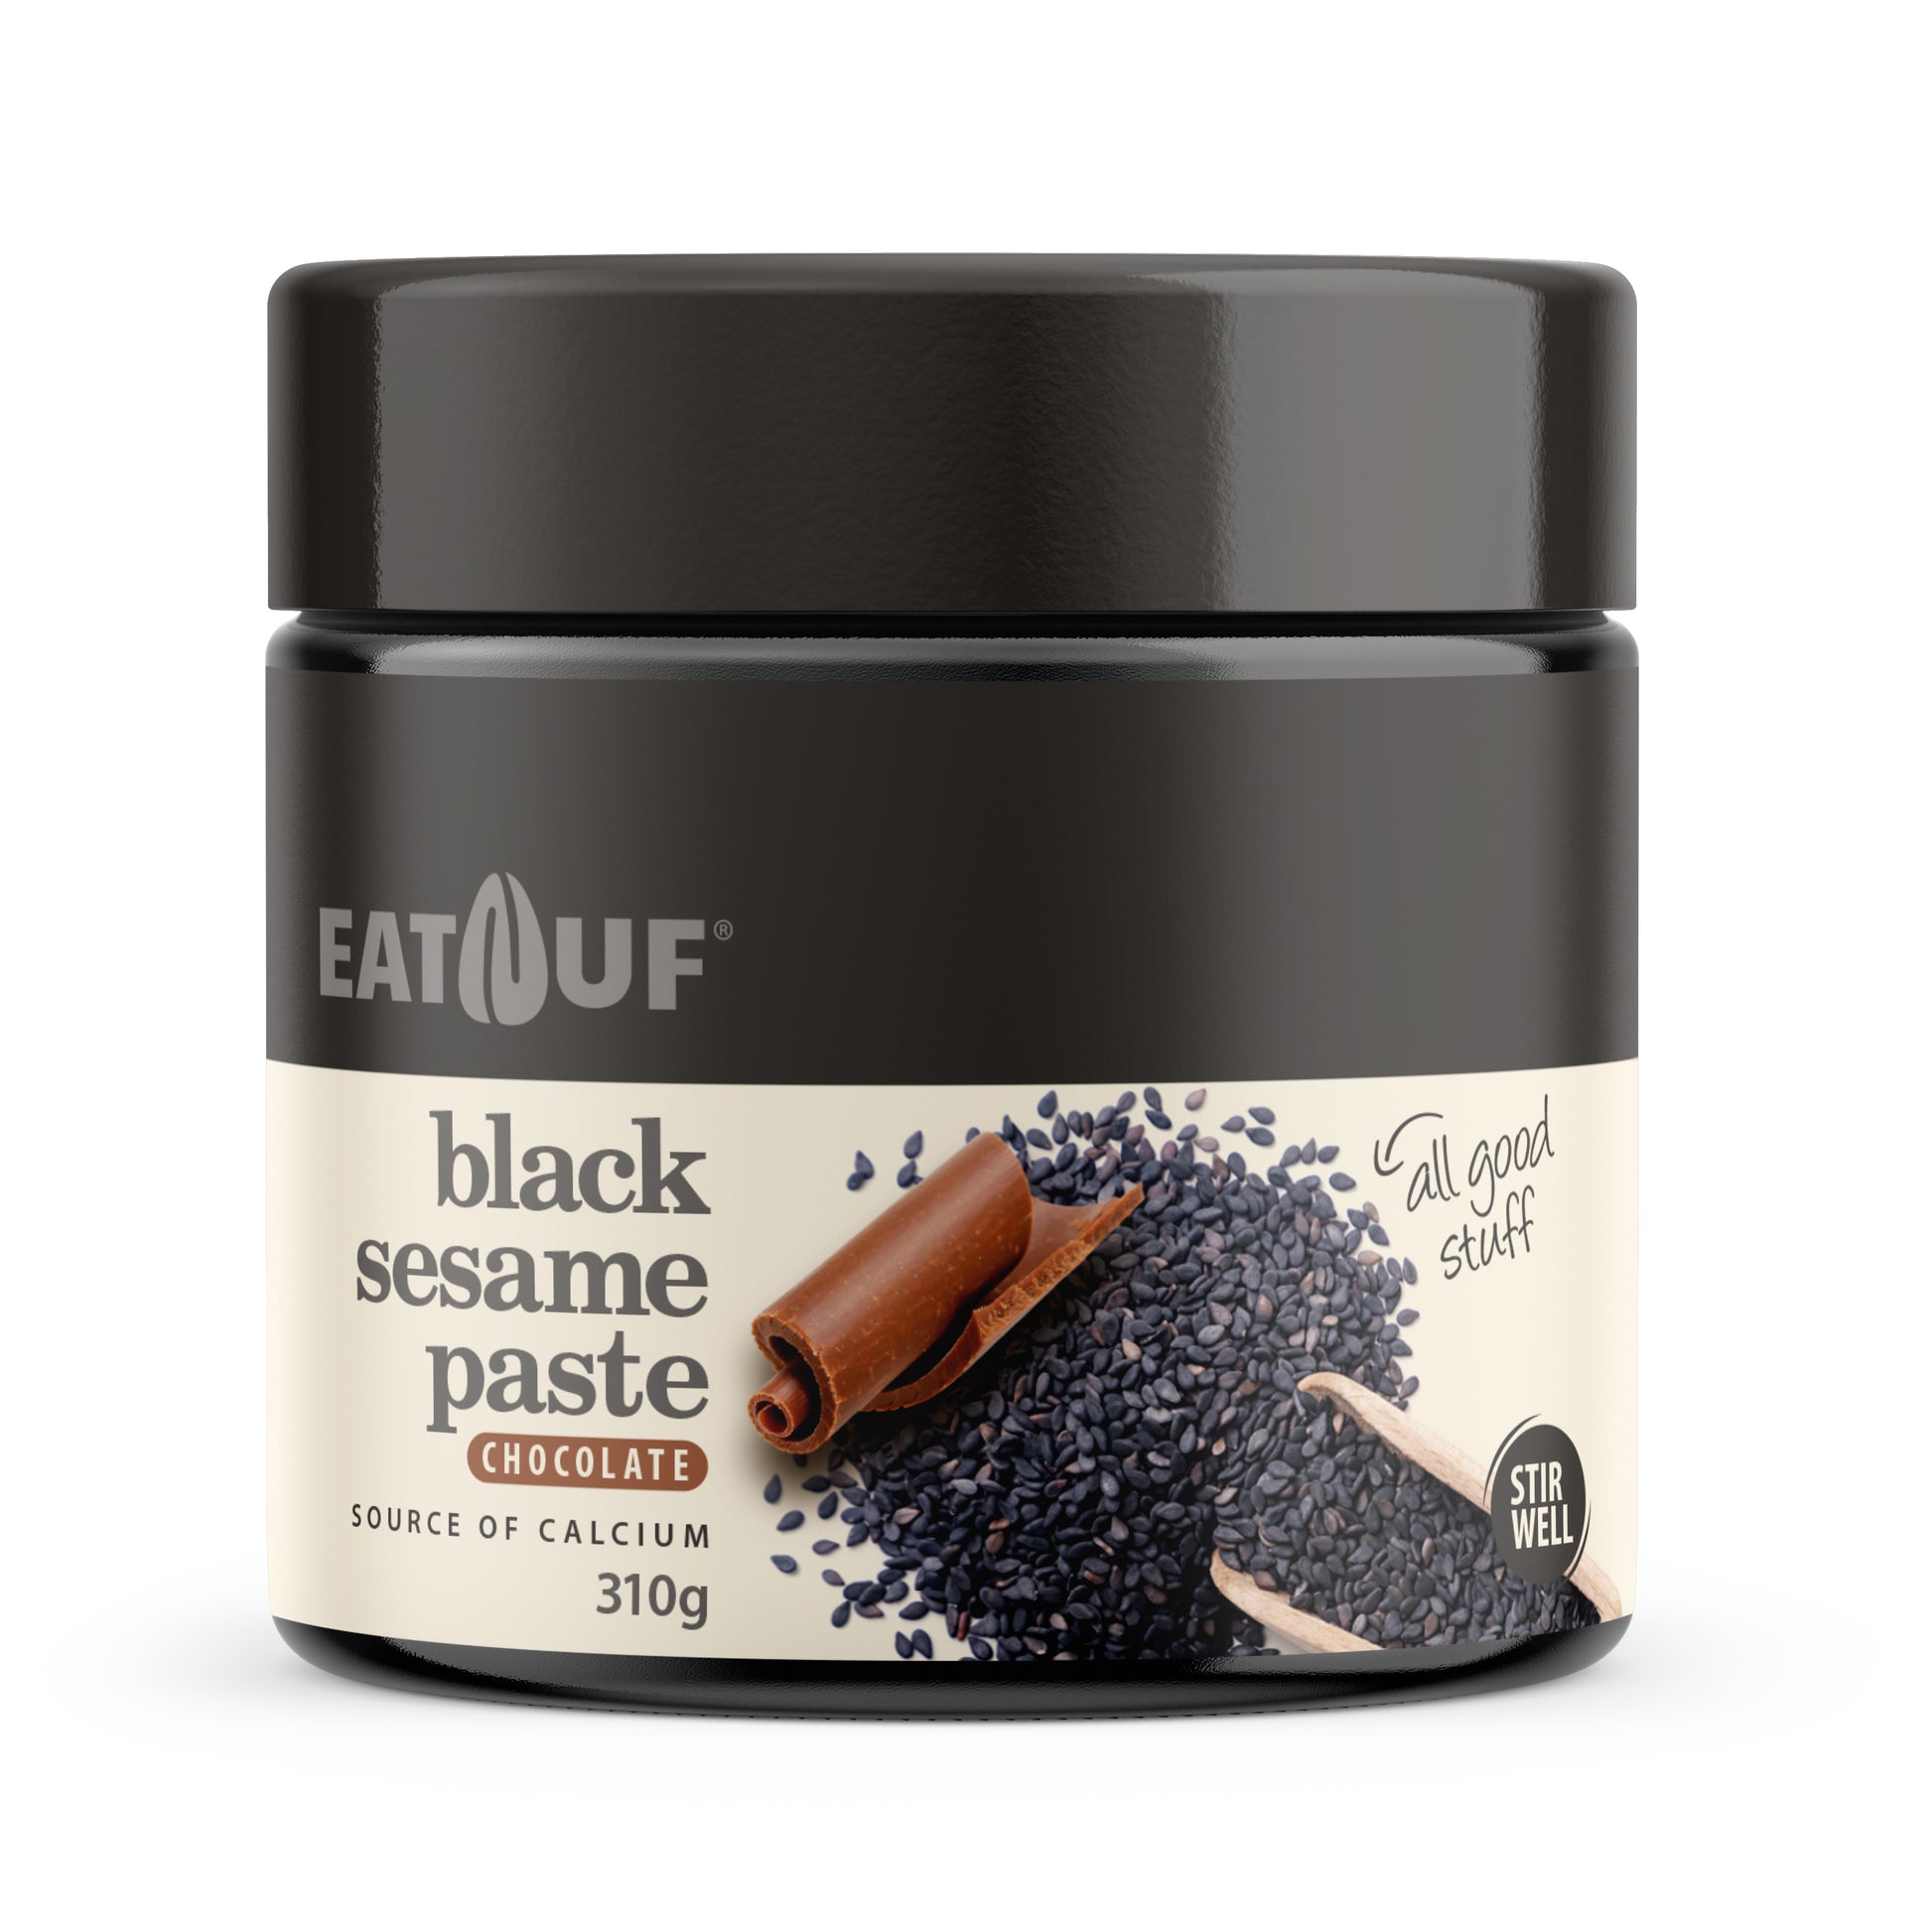 eatnuf black sesame paste chocolate